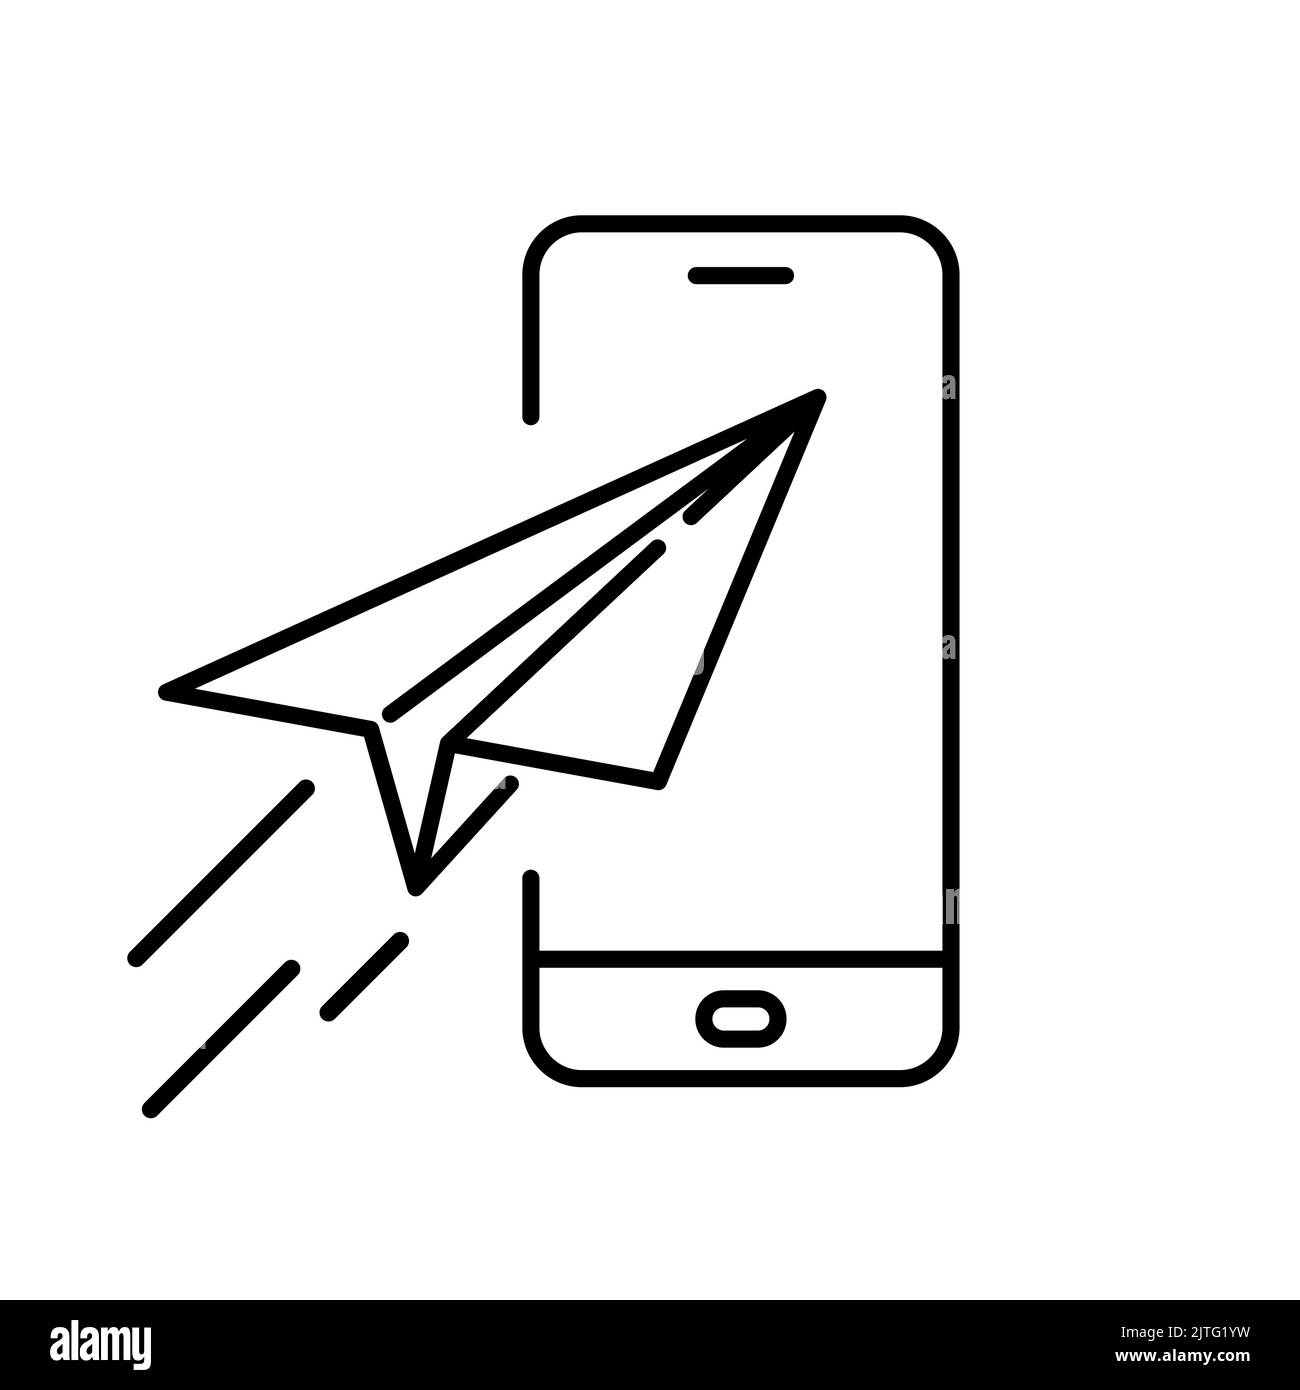 Paper plane with smartphone icon. Communication concept. Black conceptual icon. Vector illustration. Stock Vector